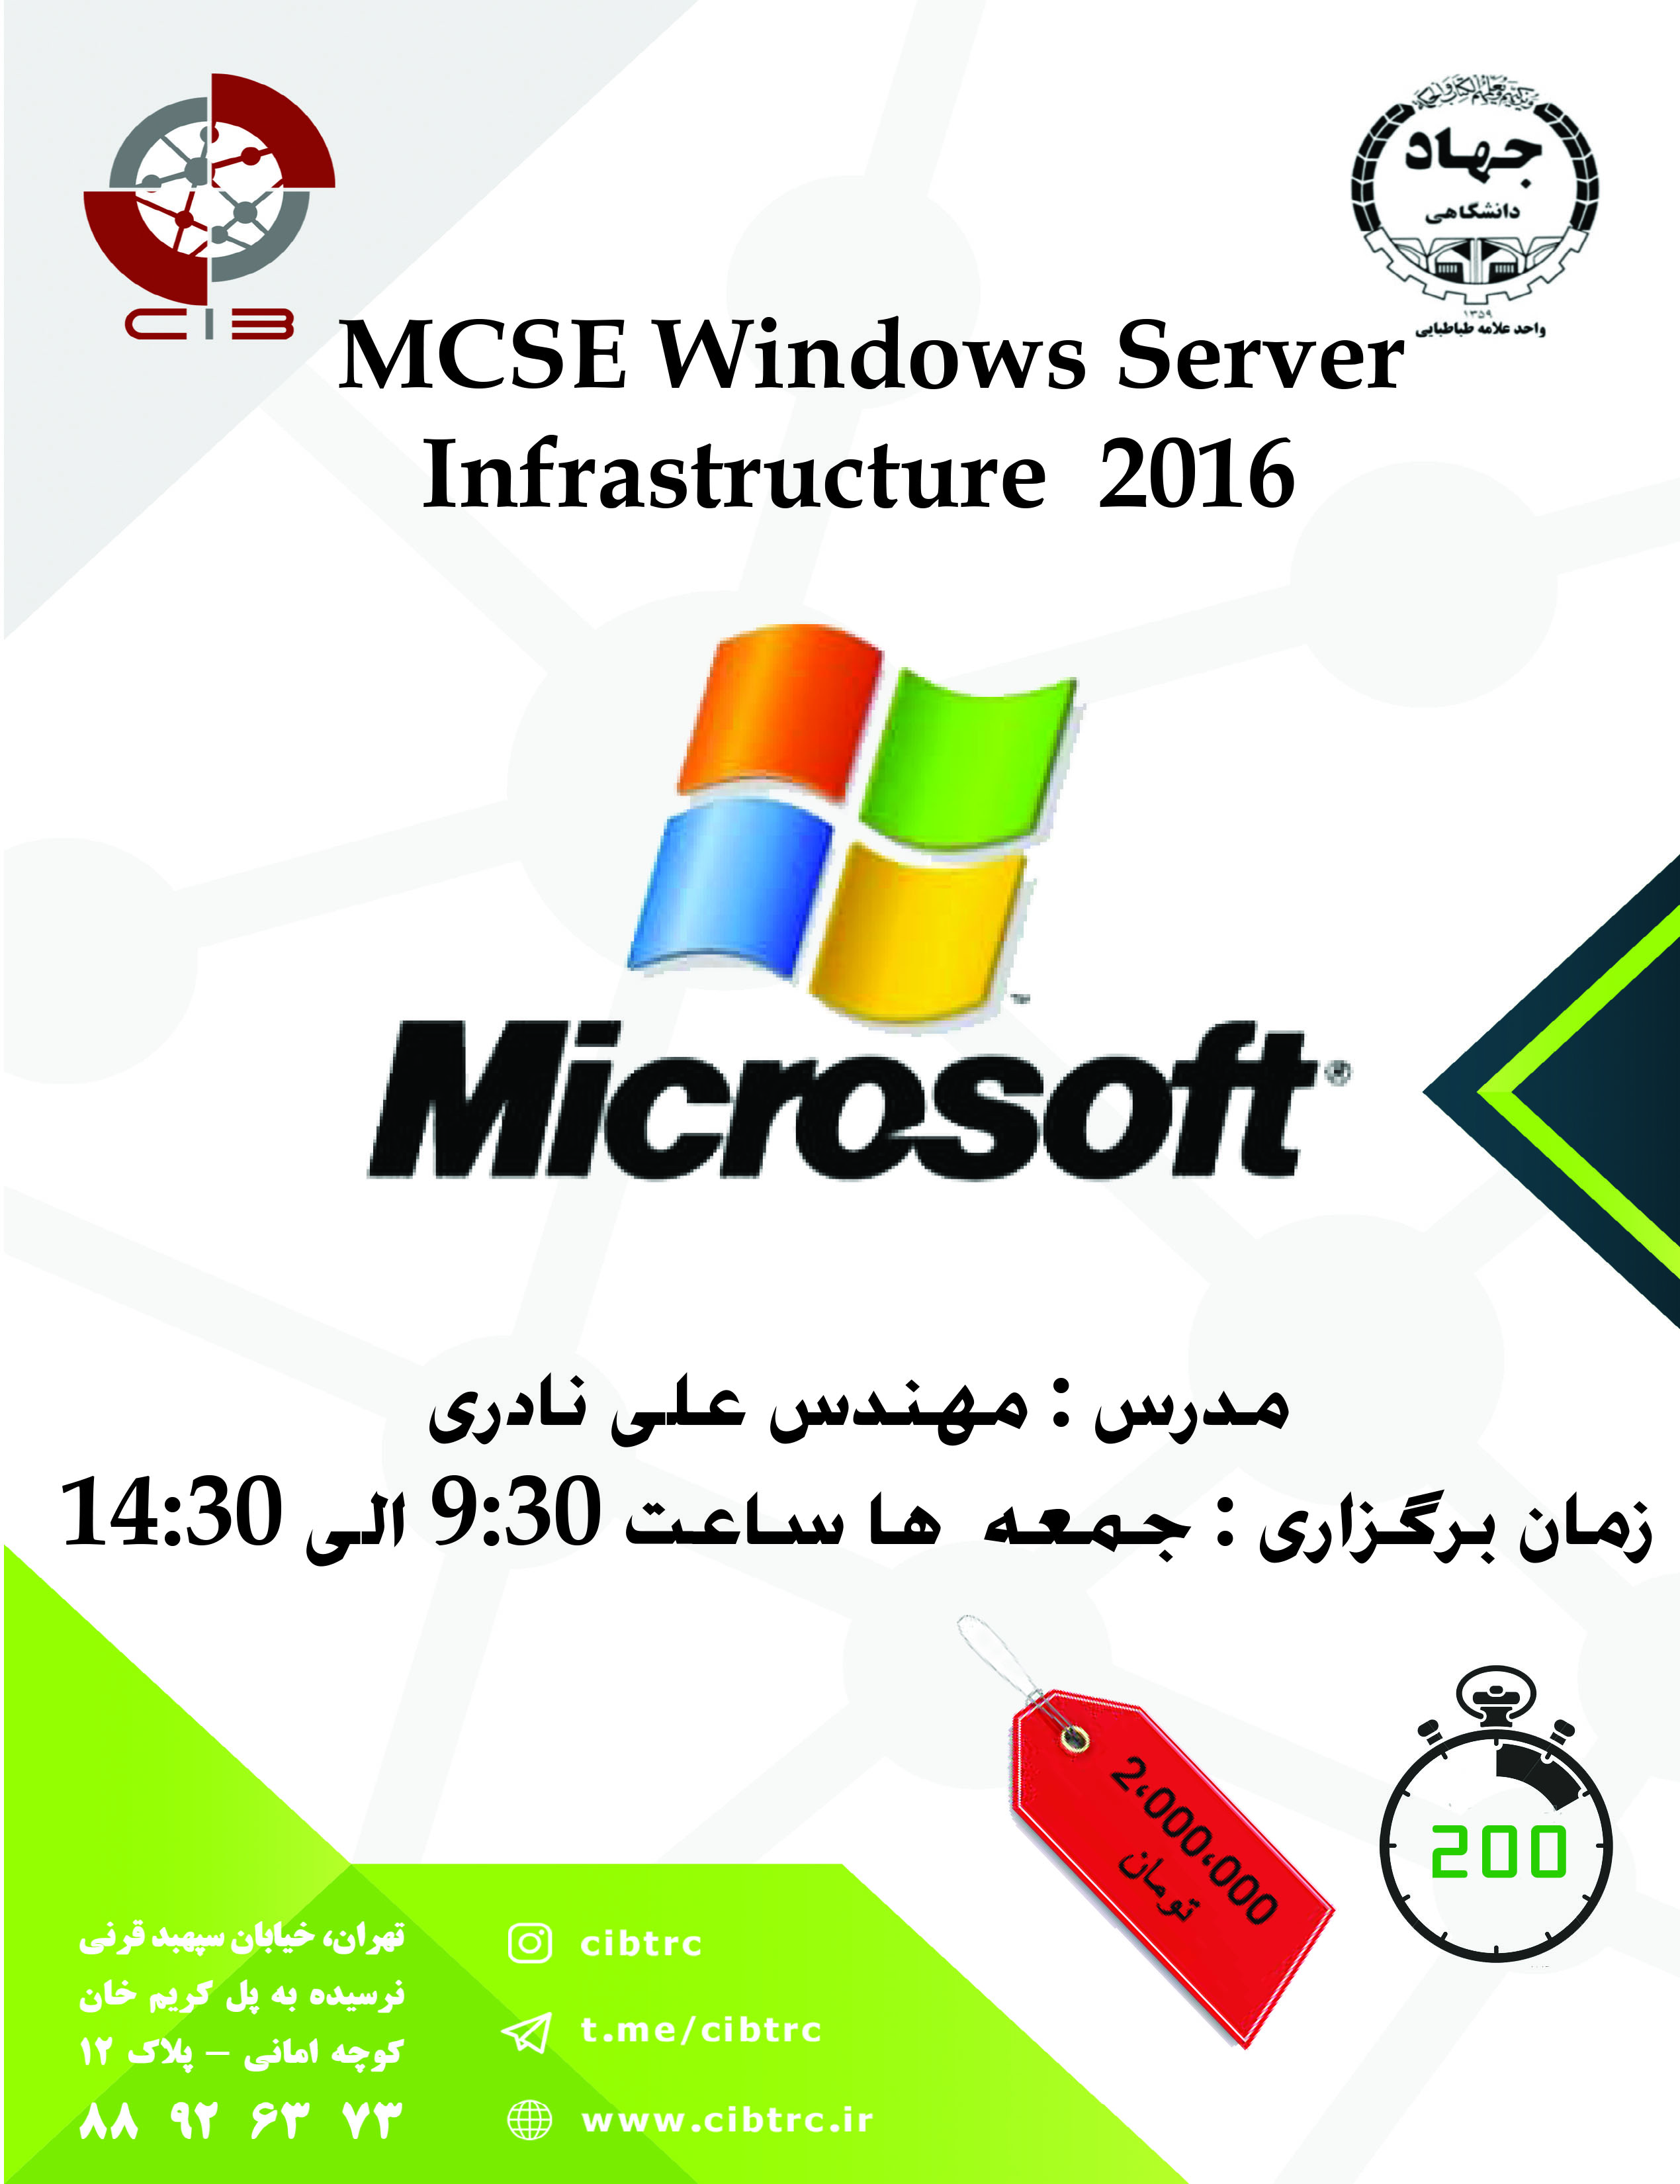 MCSE Server 2016